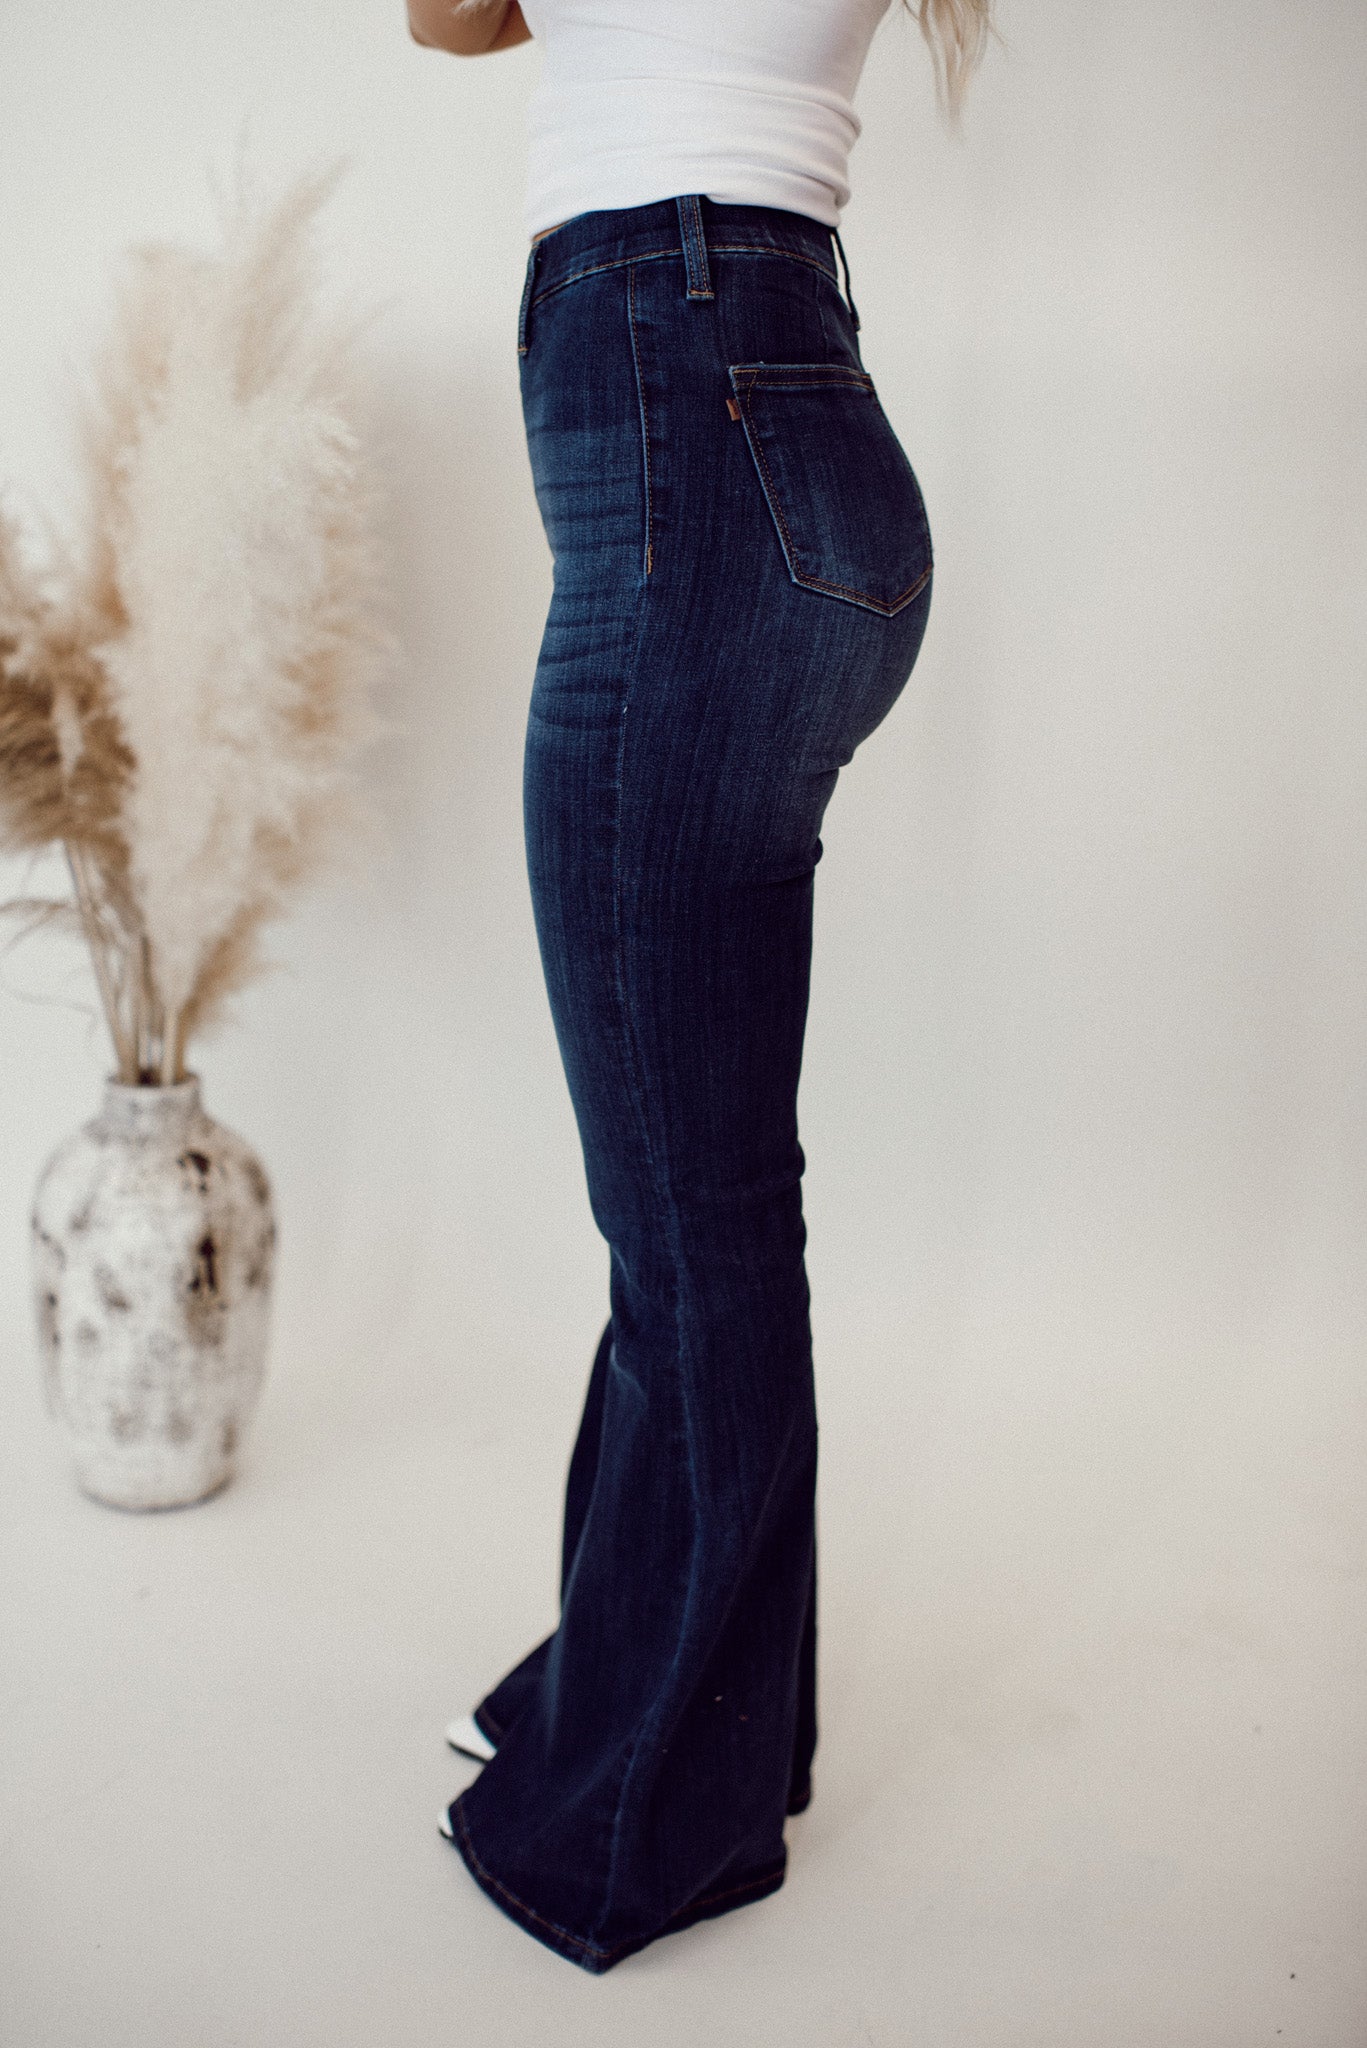 Judy Blue Morgynn High Waisted Flare Jeans (Dark)